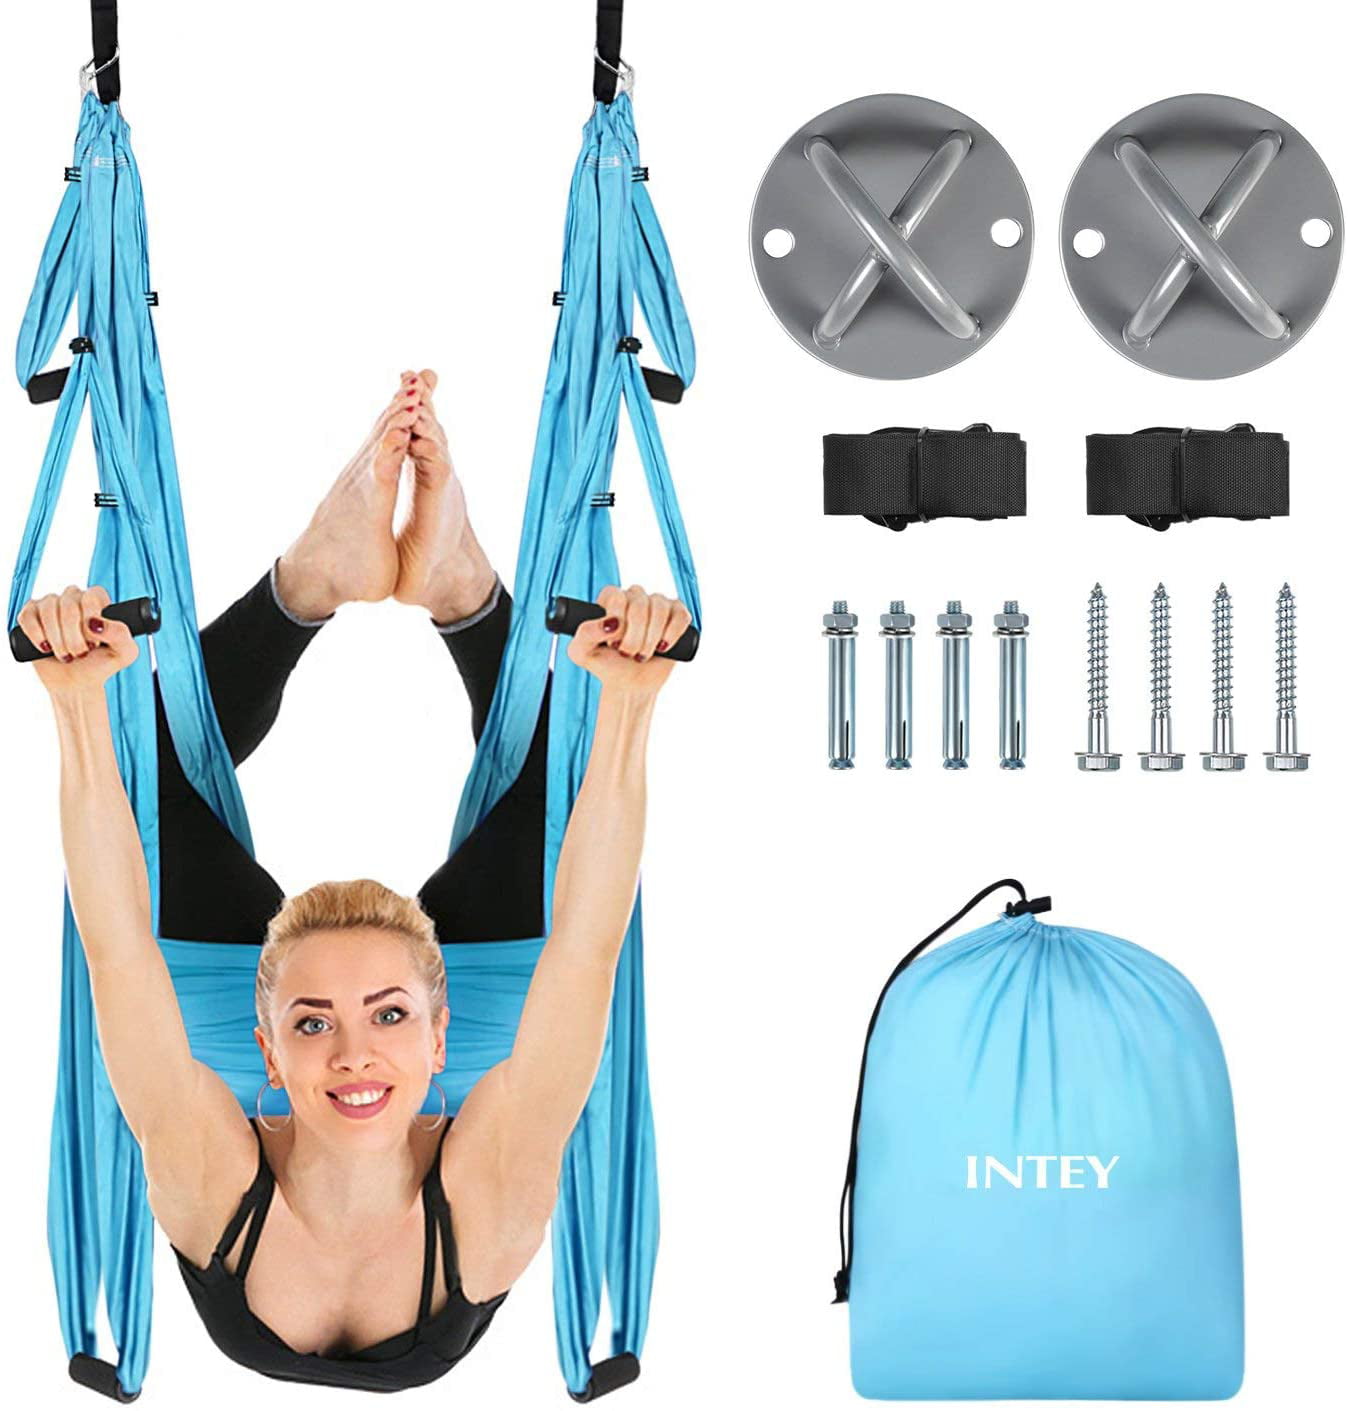 Large Solid Aerial Yoga Swing Sling Hammock Hanging Inversion Trapeze+Bag US 